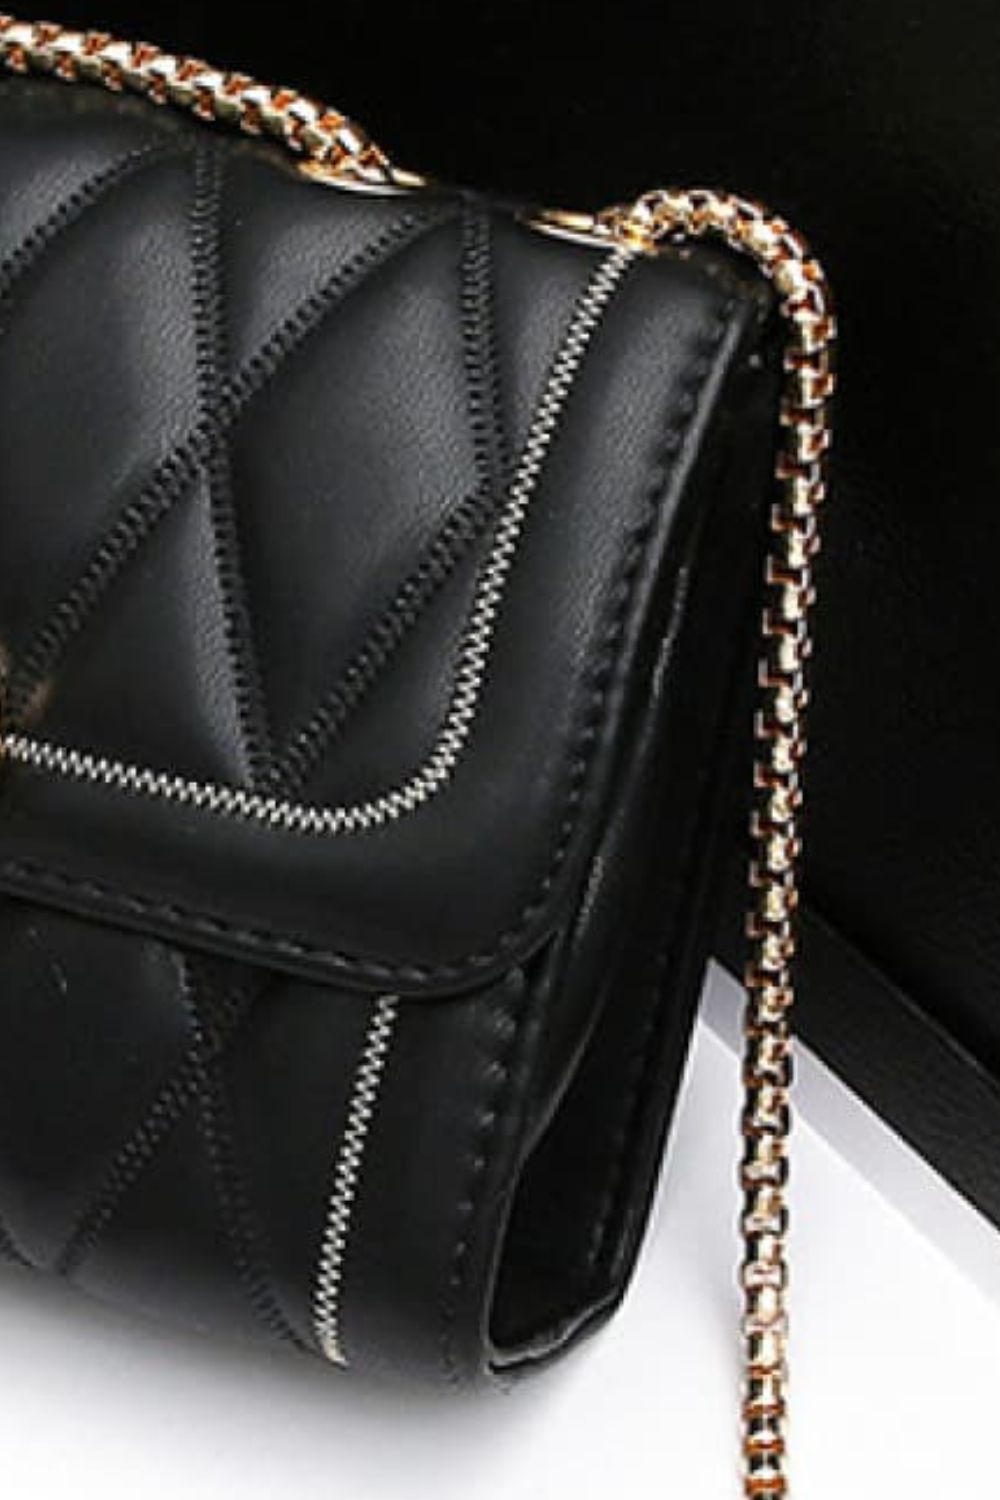 Heart Buckle PU Leather Crossbody Bag